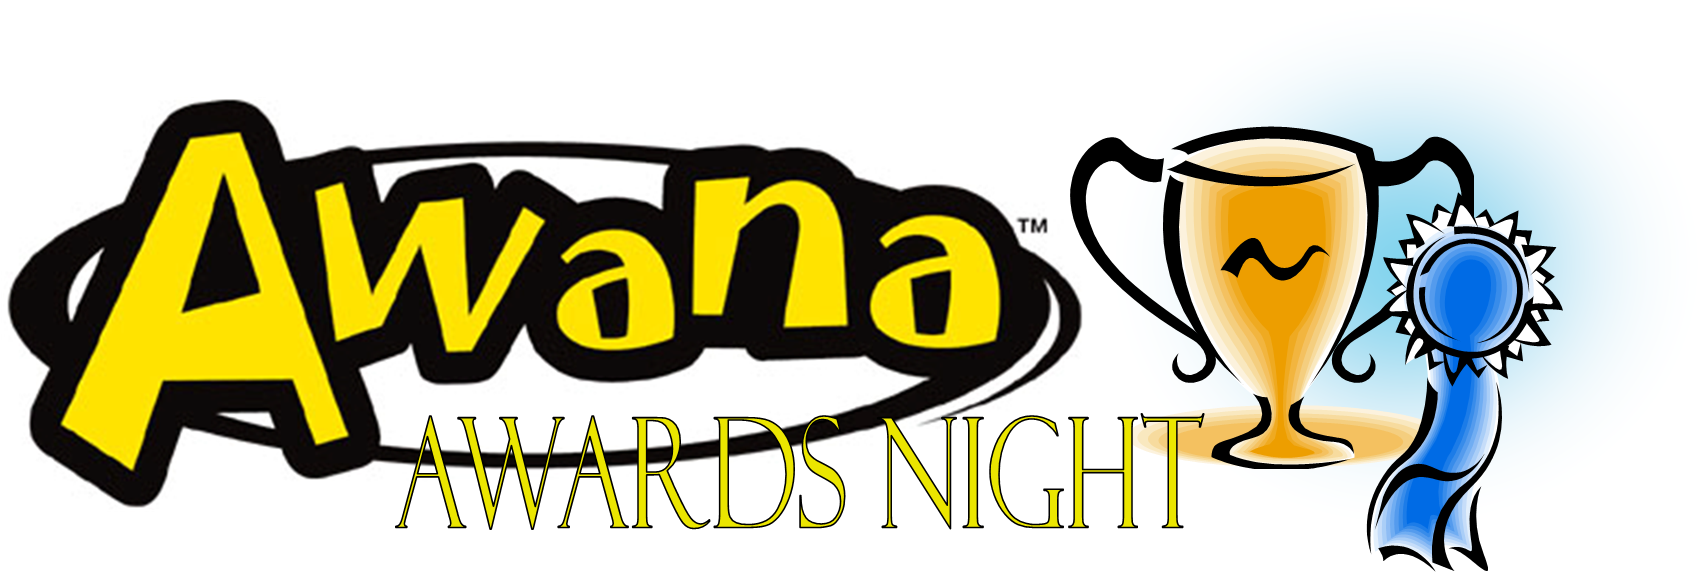 Free Awards Banquet Cliparts, Download Free Clip Art, - Awana Awards Night Invitation (1703x599)